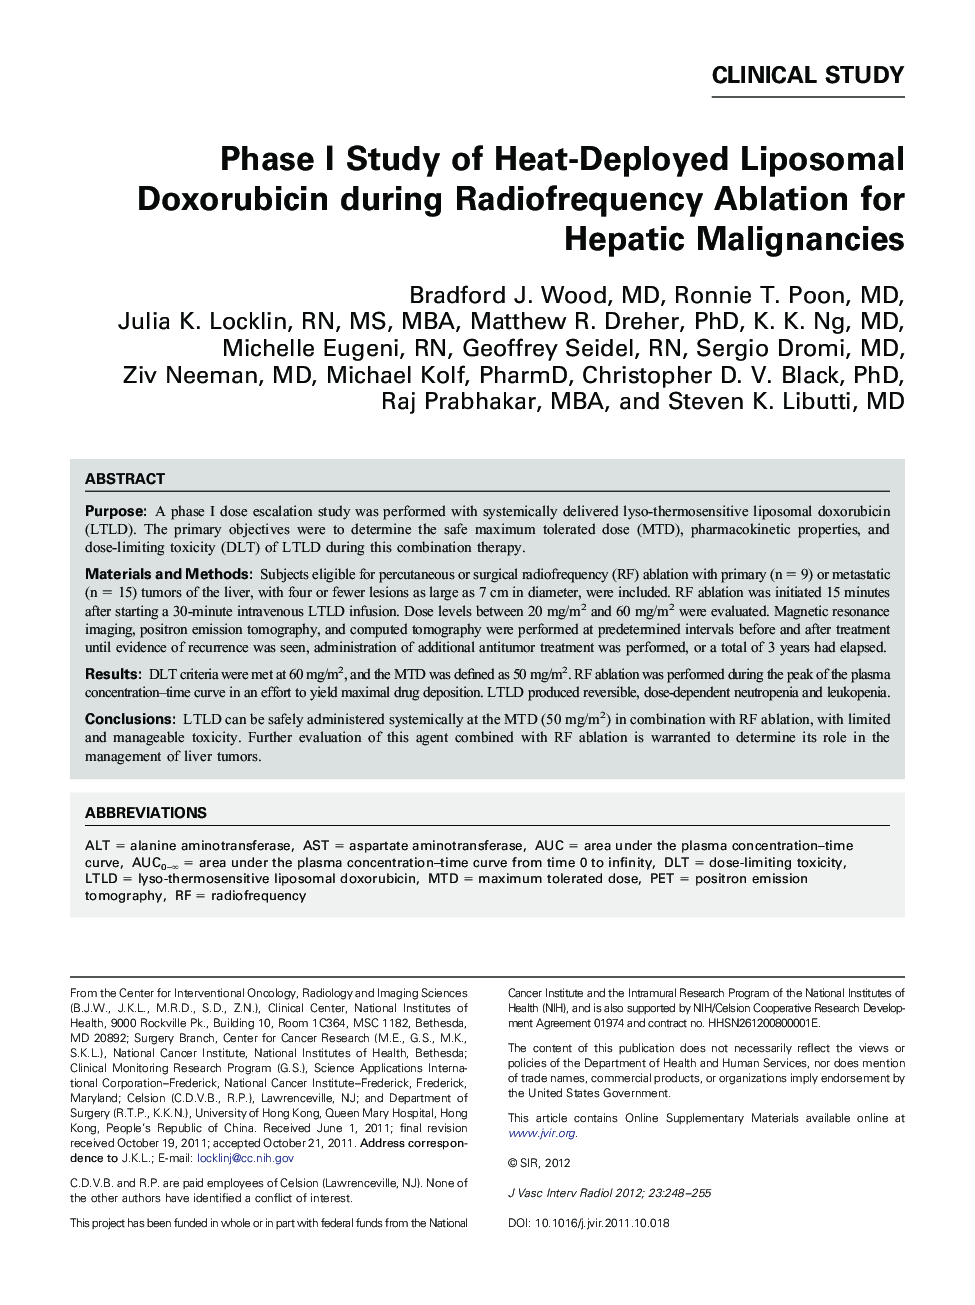 Phase I Study of Heat-Deployed Liposomal Doxorubicin during Radiofrequency Ablation for Hepatic Malignancies